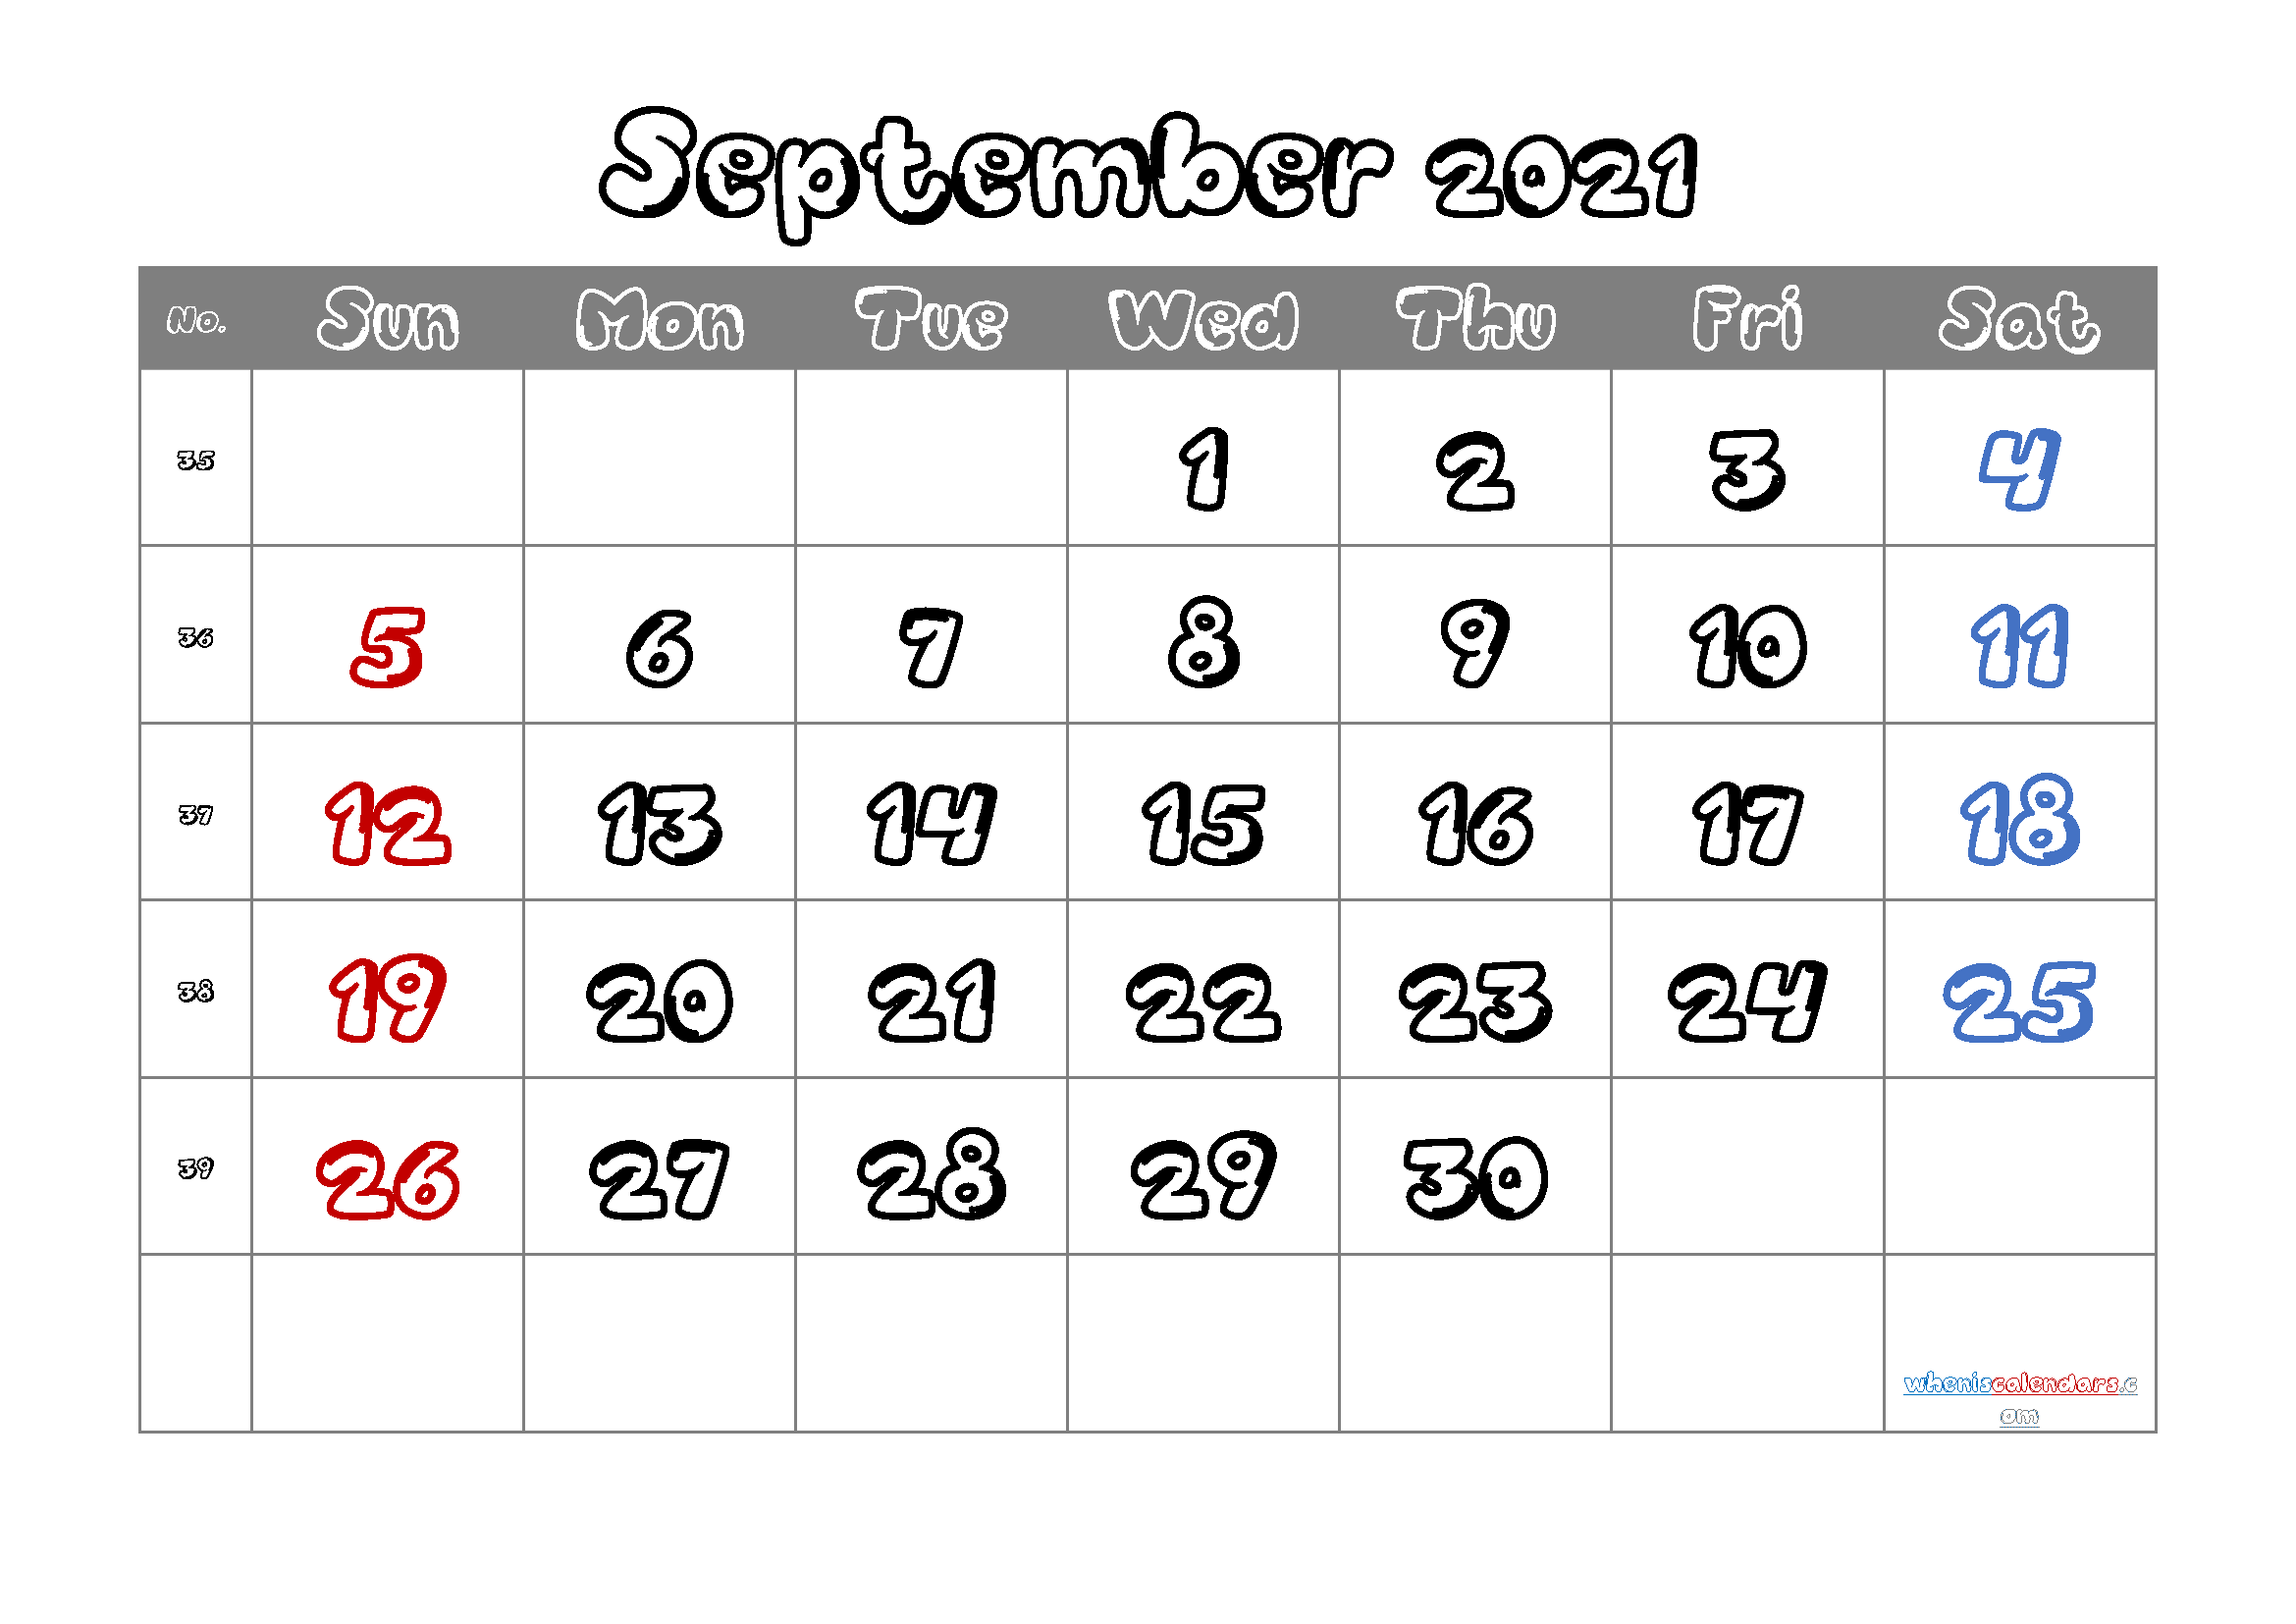 September 2021 Calendar Free Printable